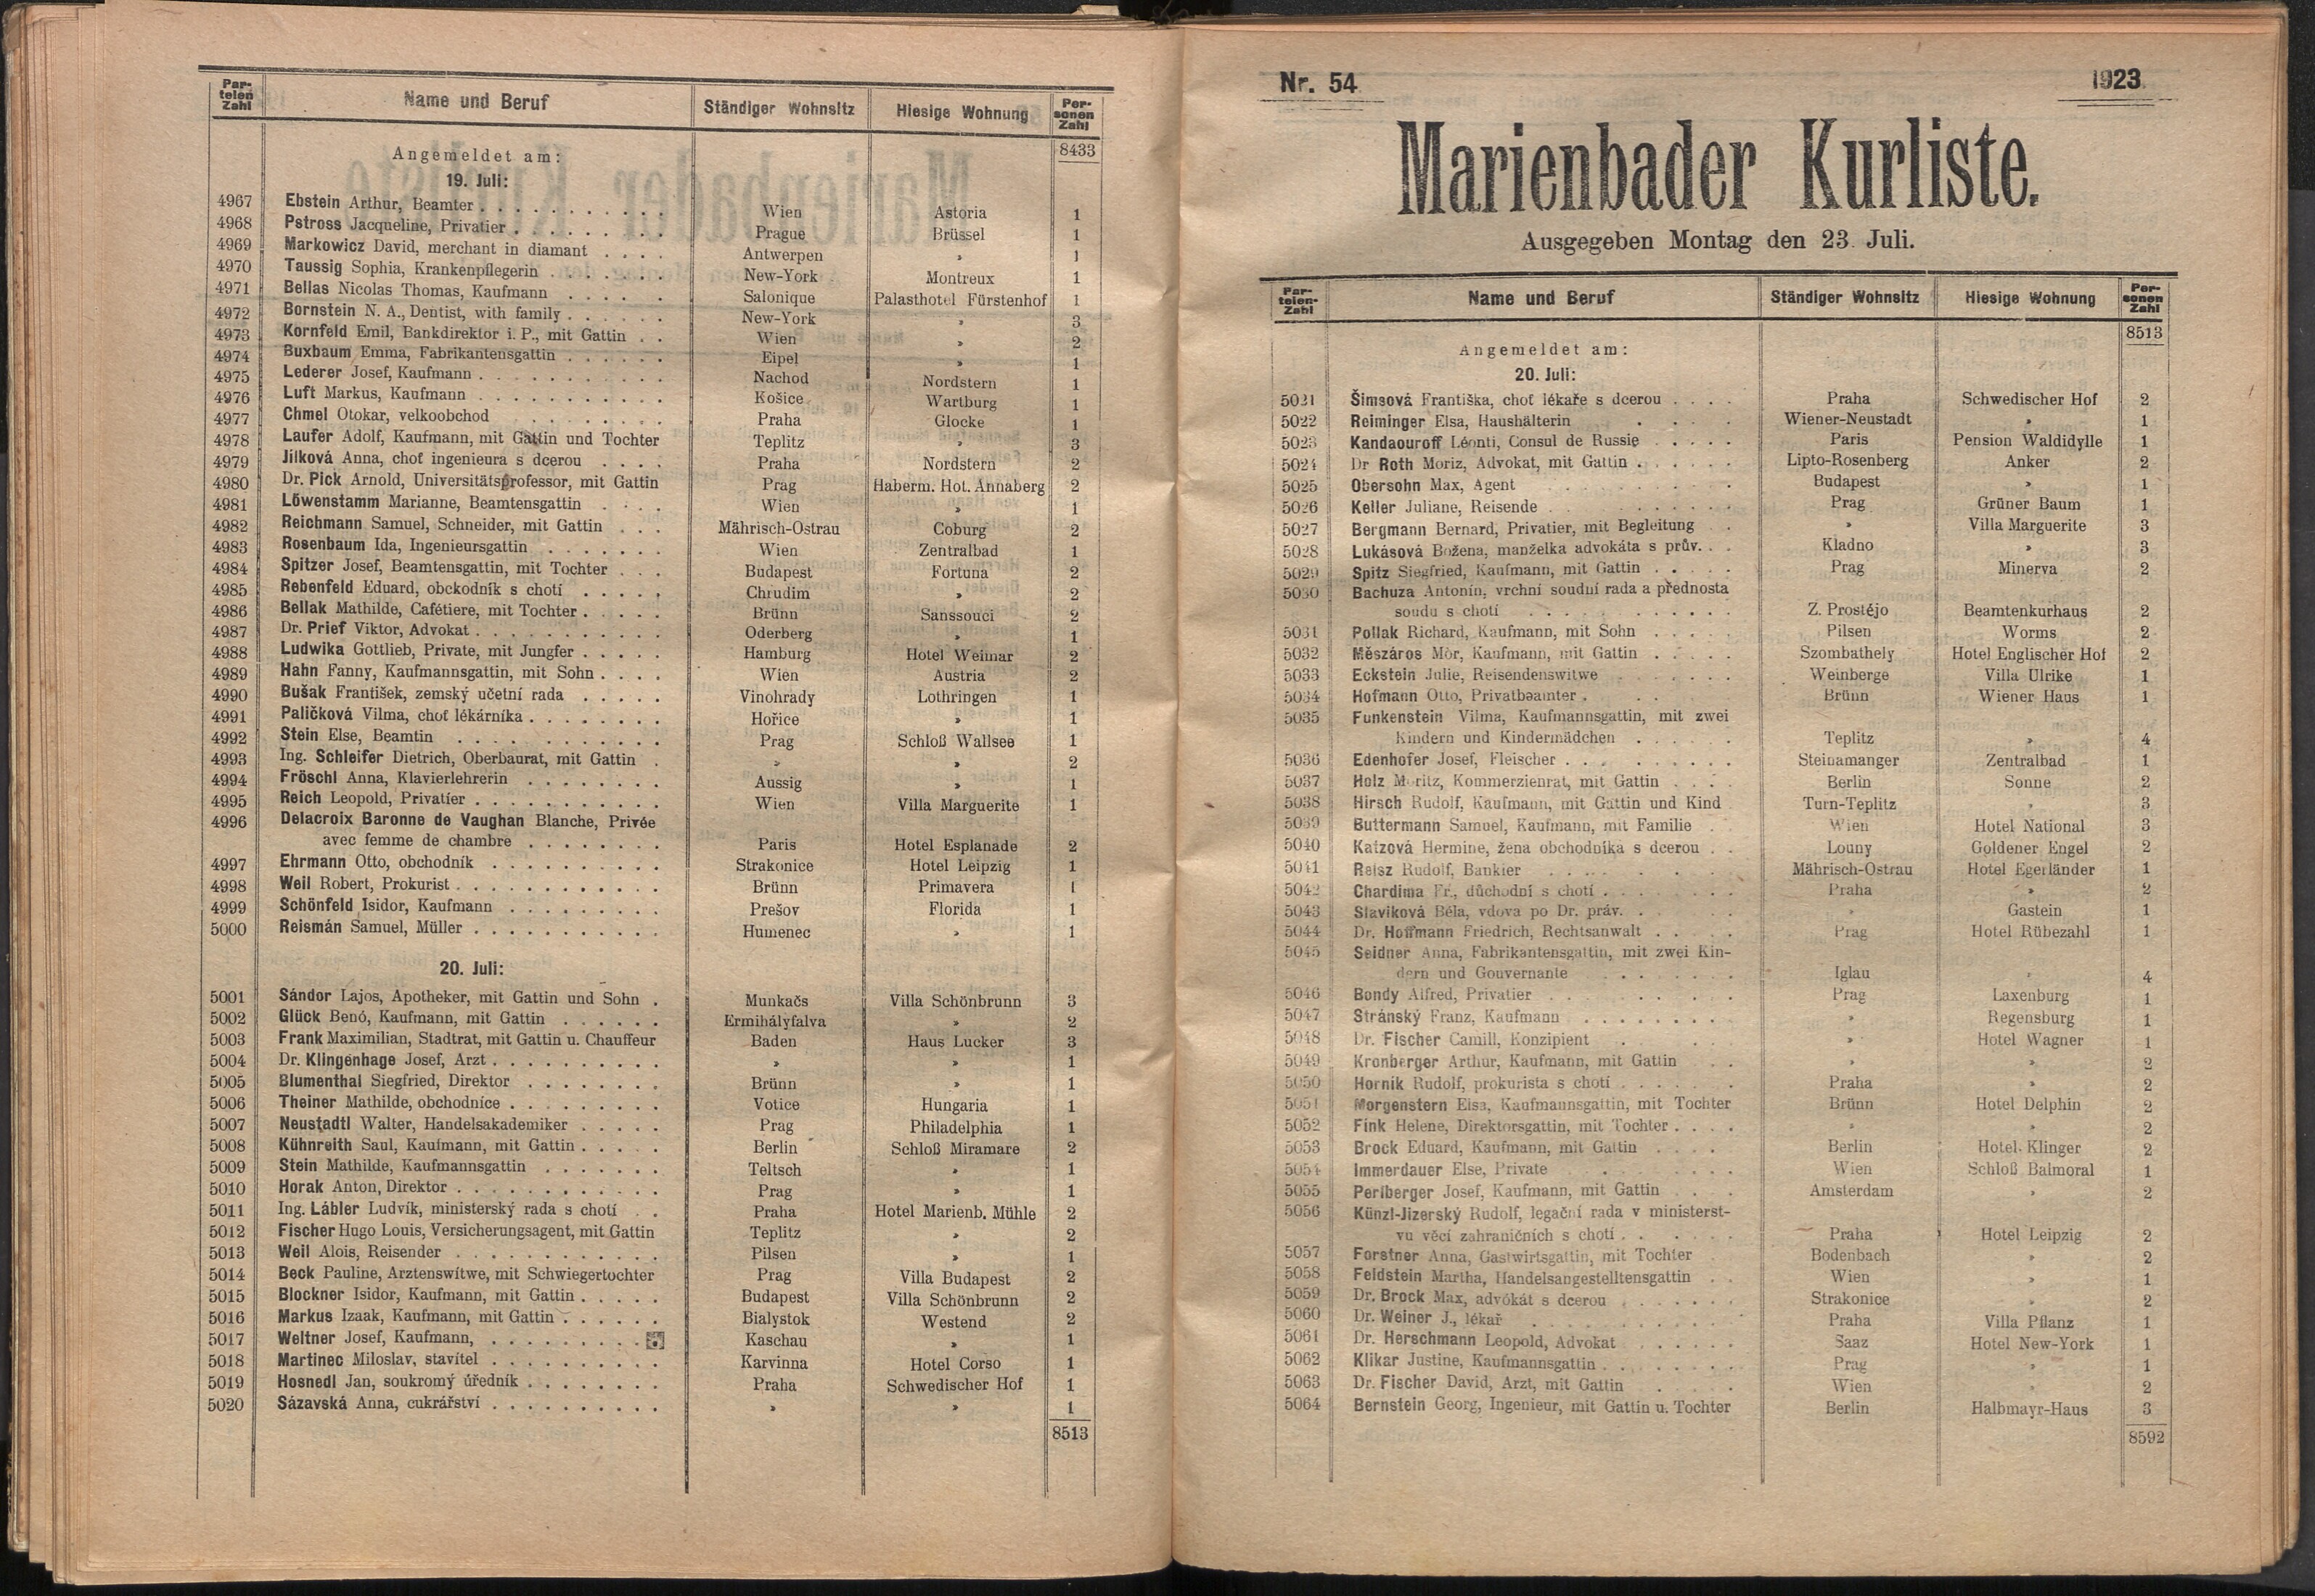 94. soap-ch_knihovna_marienbader-kurliste-1923_0940